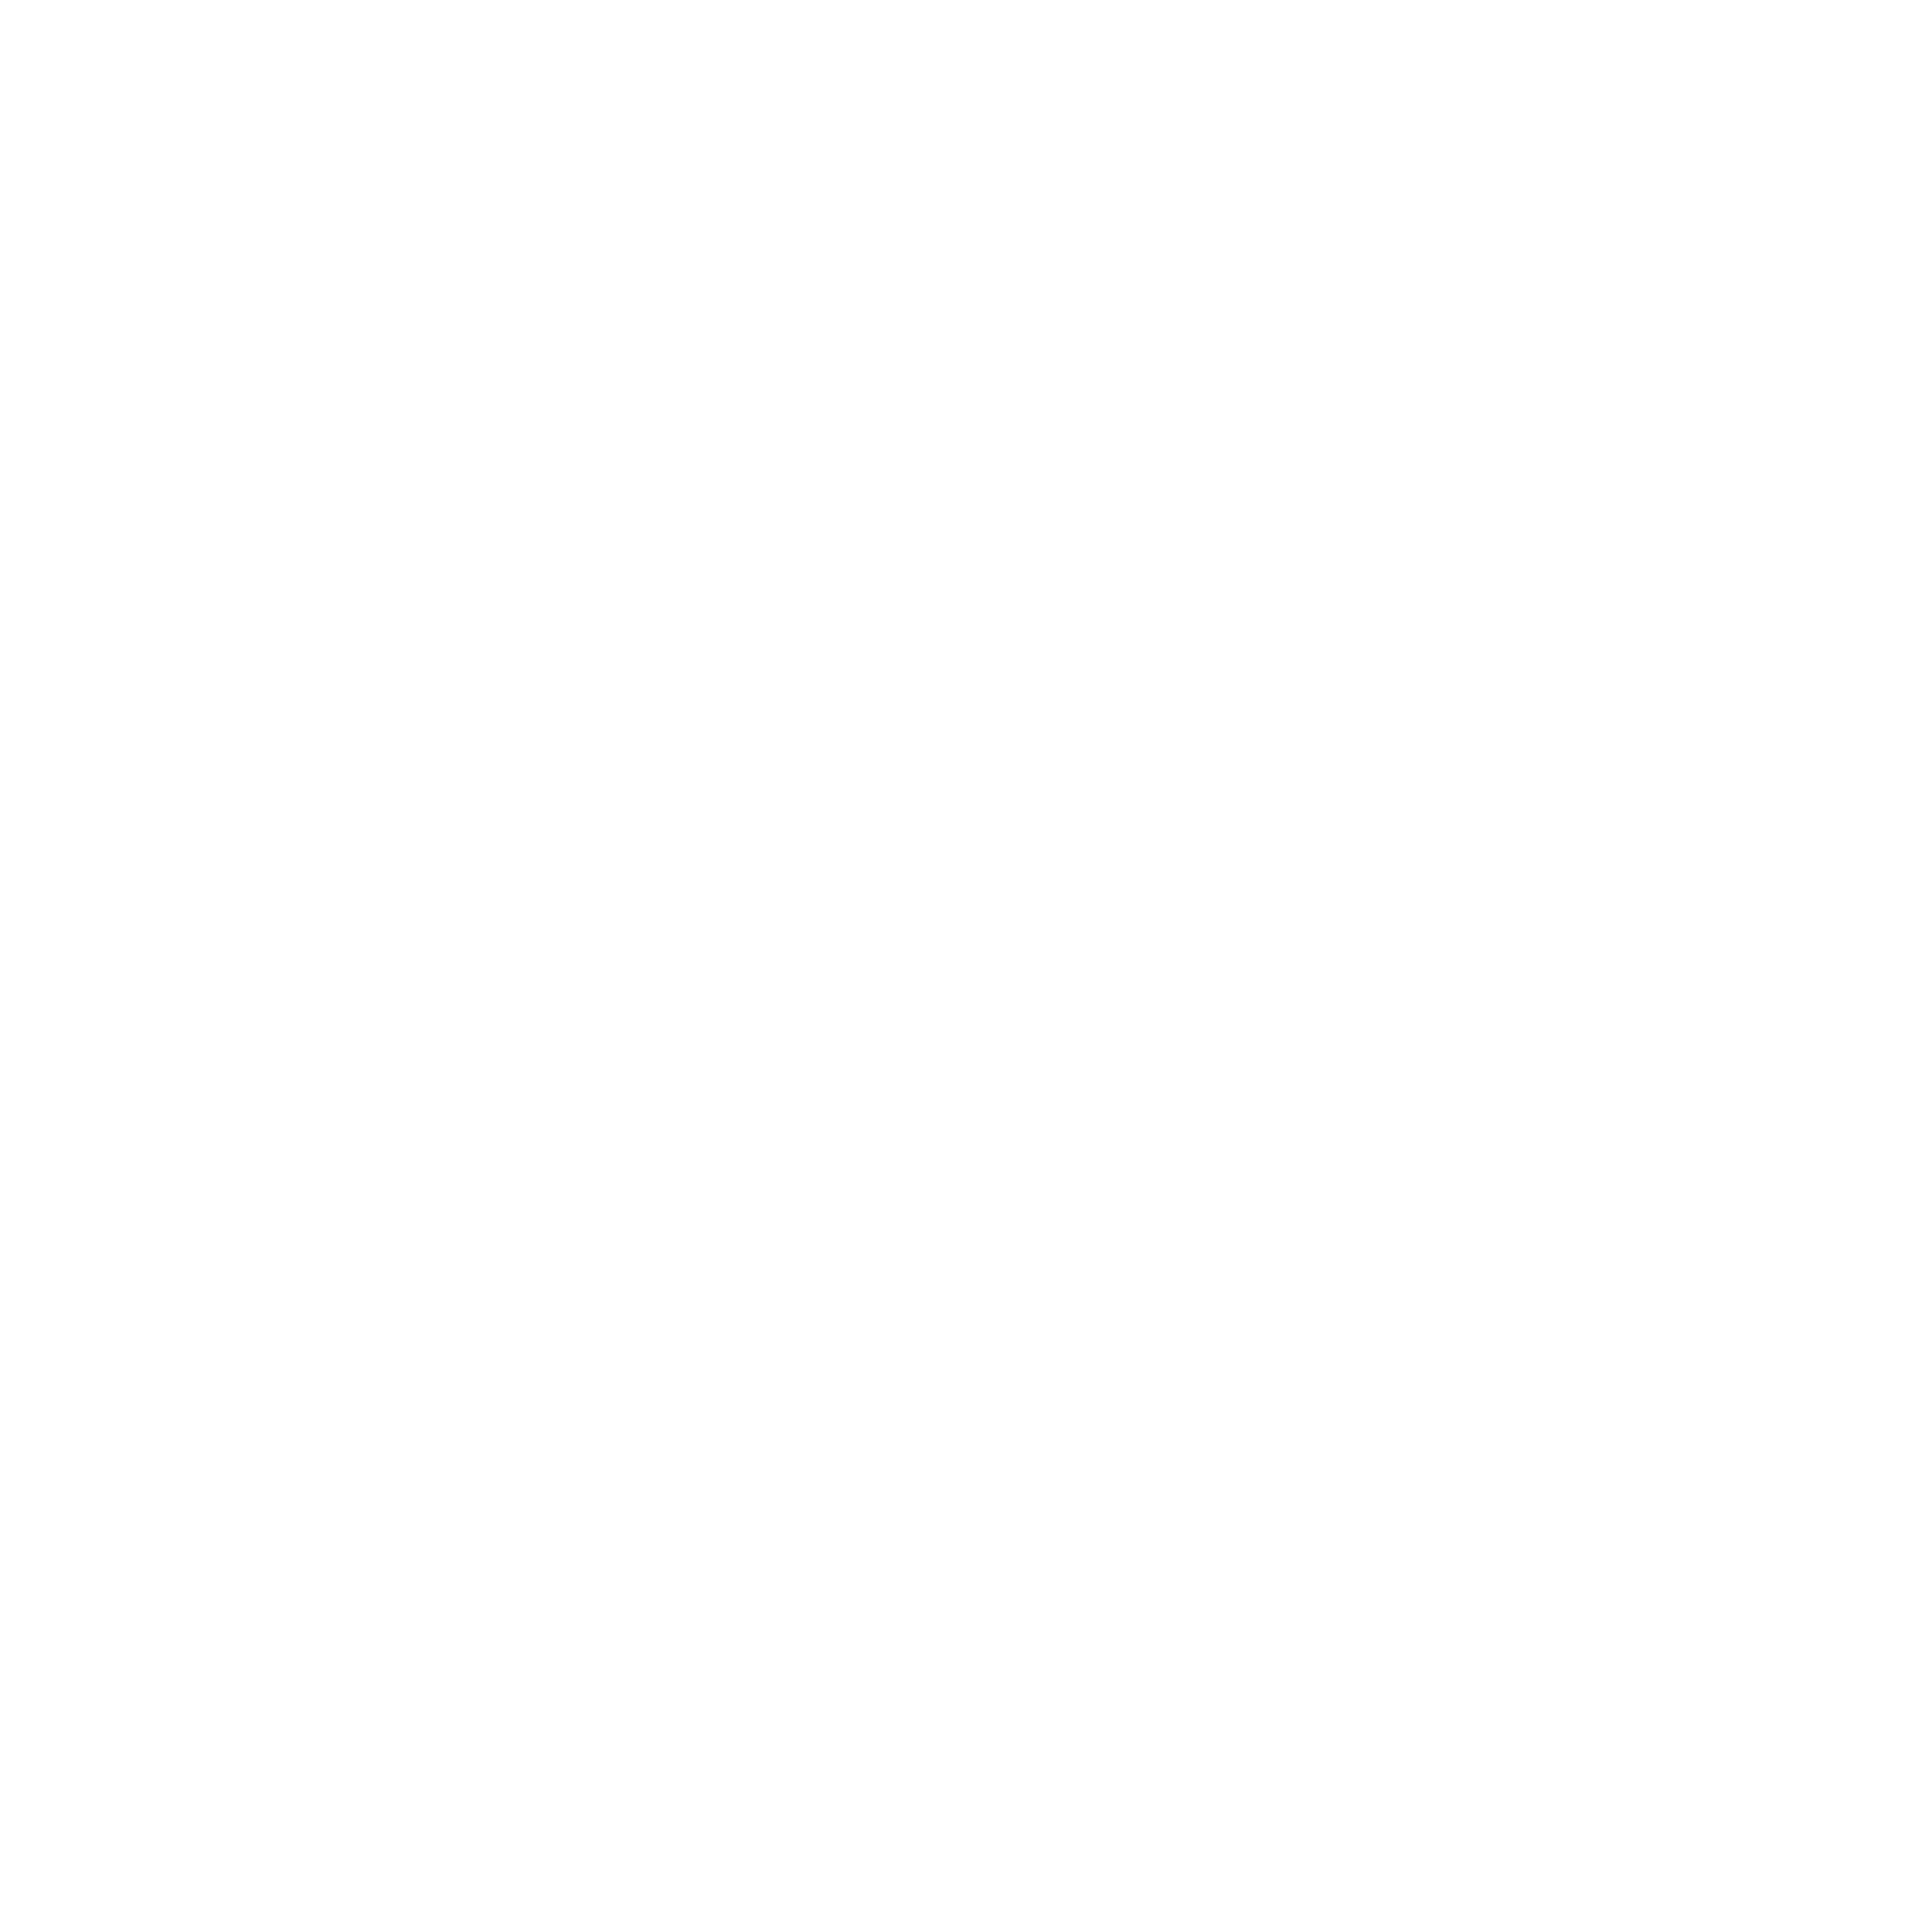 Corbis Logo - Corbis Logo PNG Transparent & SVG Vector - Freebie Supply